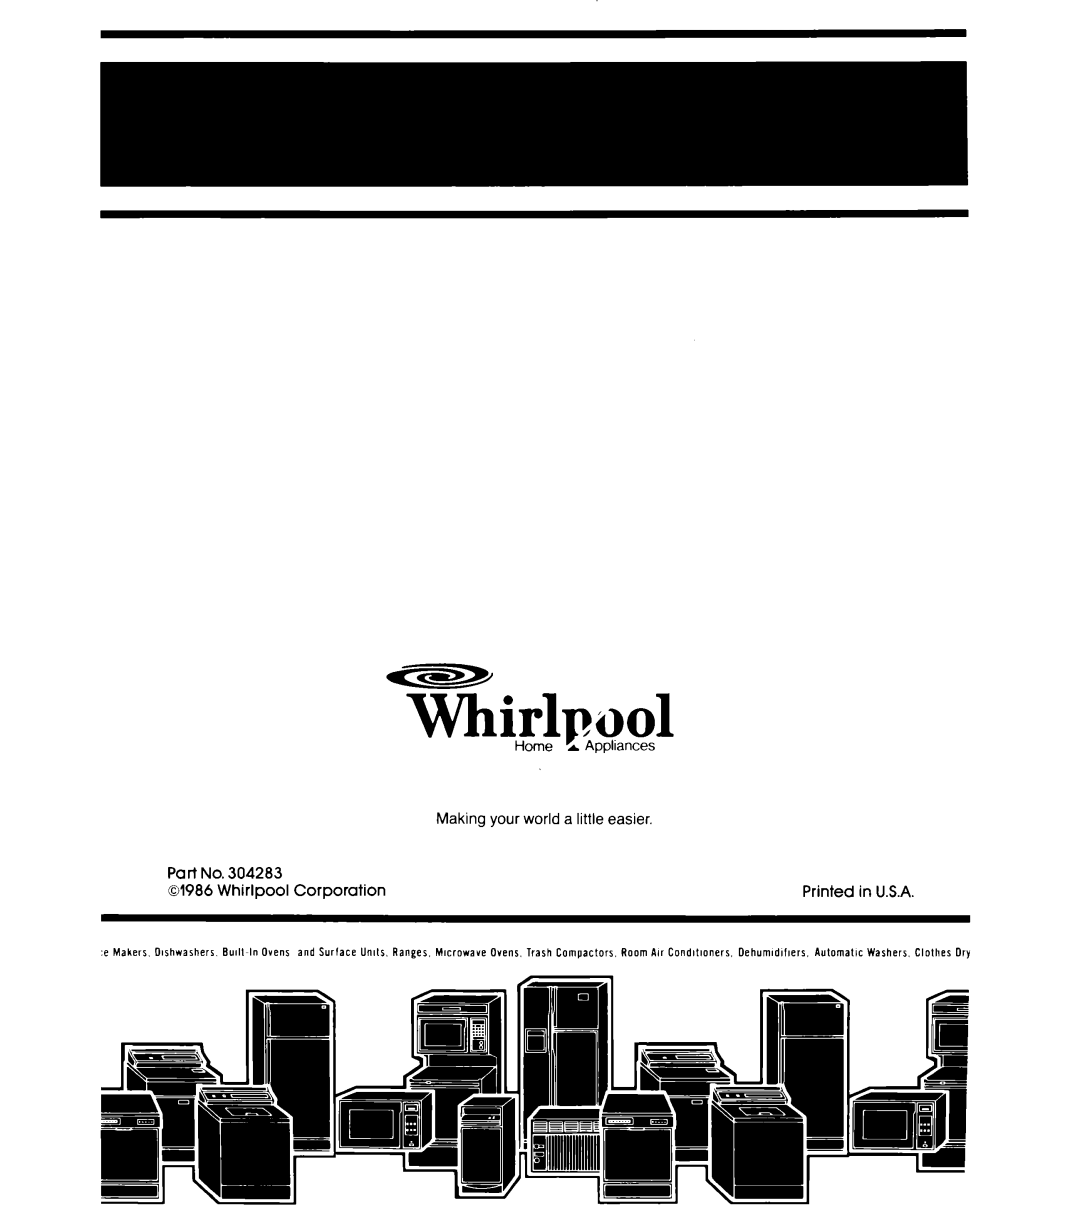 Whirlpool DP1098XR Series TKirlnool, Appliances, Making your world a little easier, 01986, Whirlpool, Corporation, Printed 